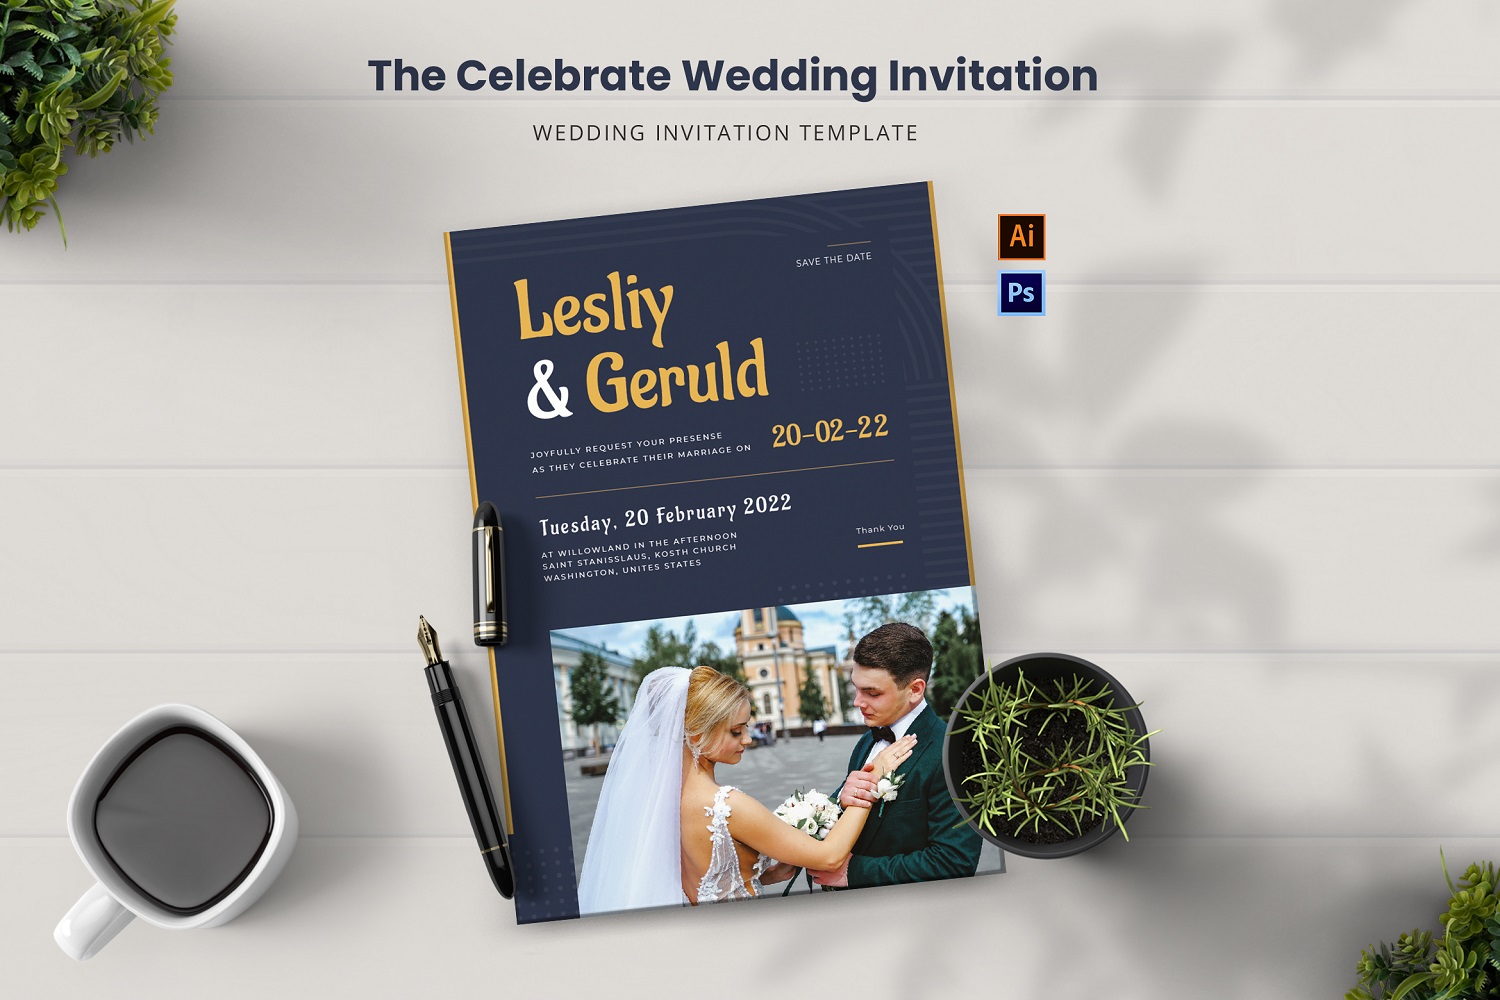 The Celebrate Wedding Invitation